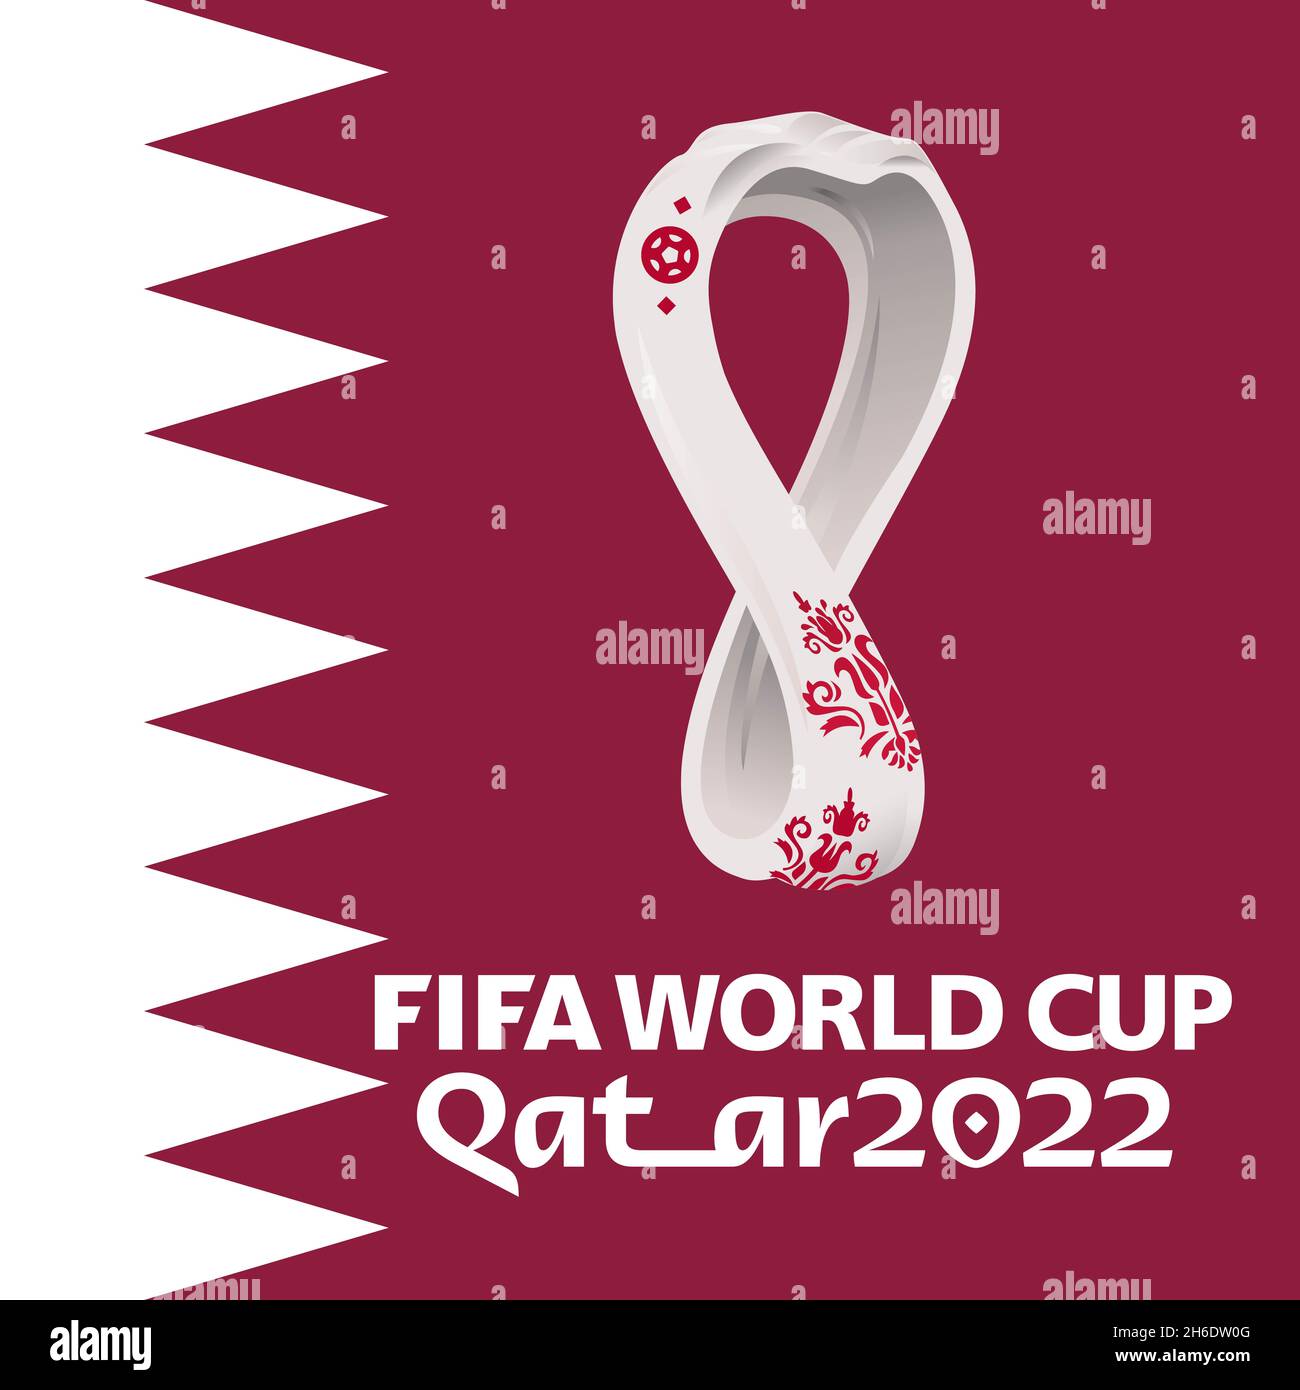 DOHA, QATAR, november-december 2022 - Qatar 2022 World Cup logo in the national Qatar flag, pennant, vector illustration Stock Photo